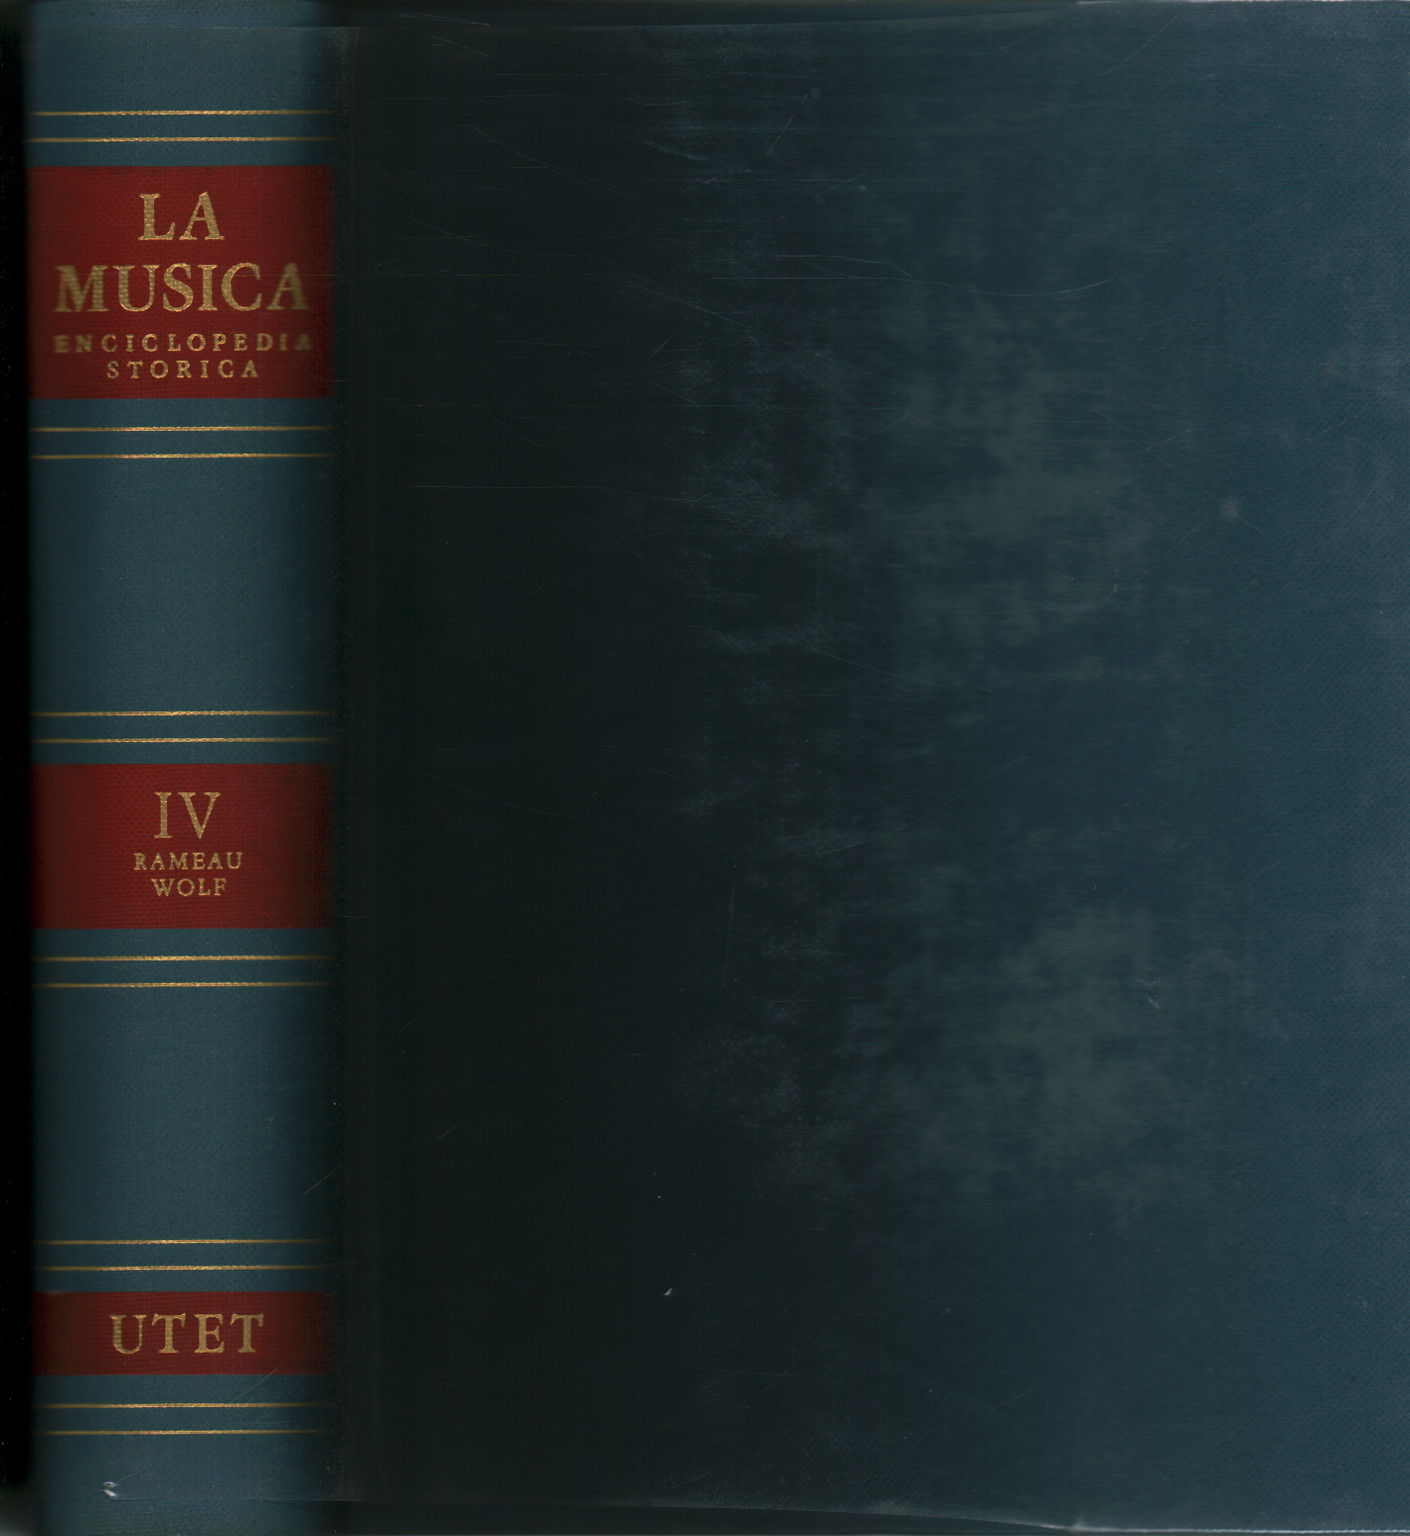 La Musica. Enciclopedia storica, parte prima, Volu, s.a.